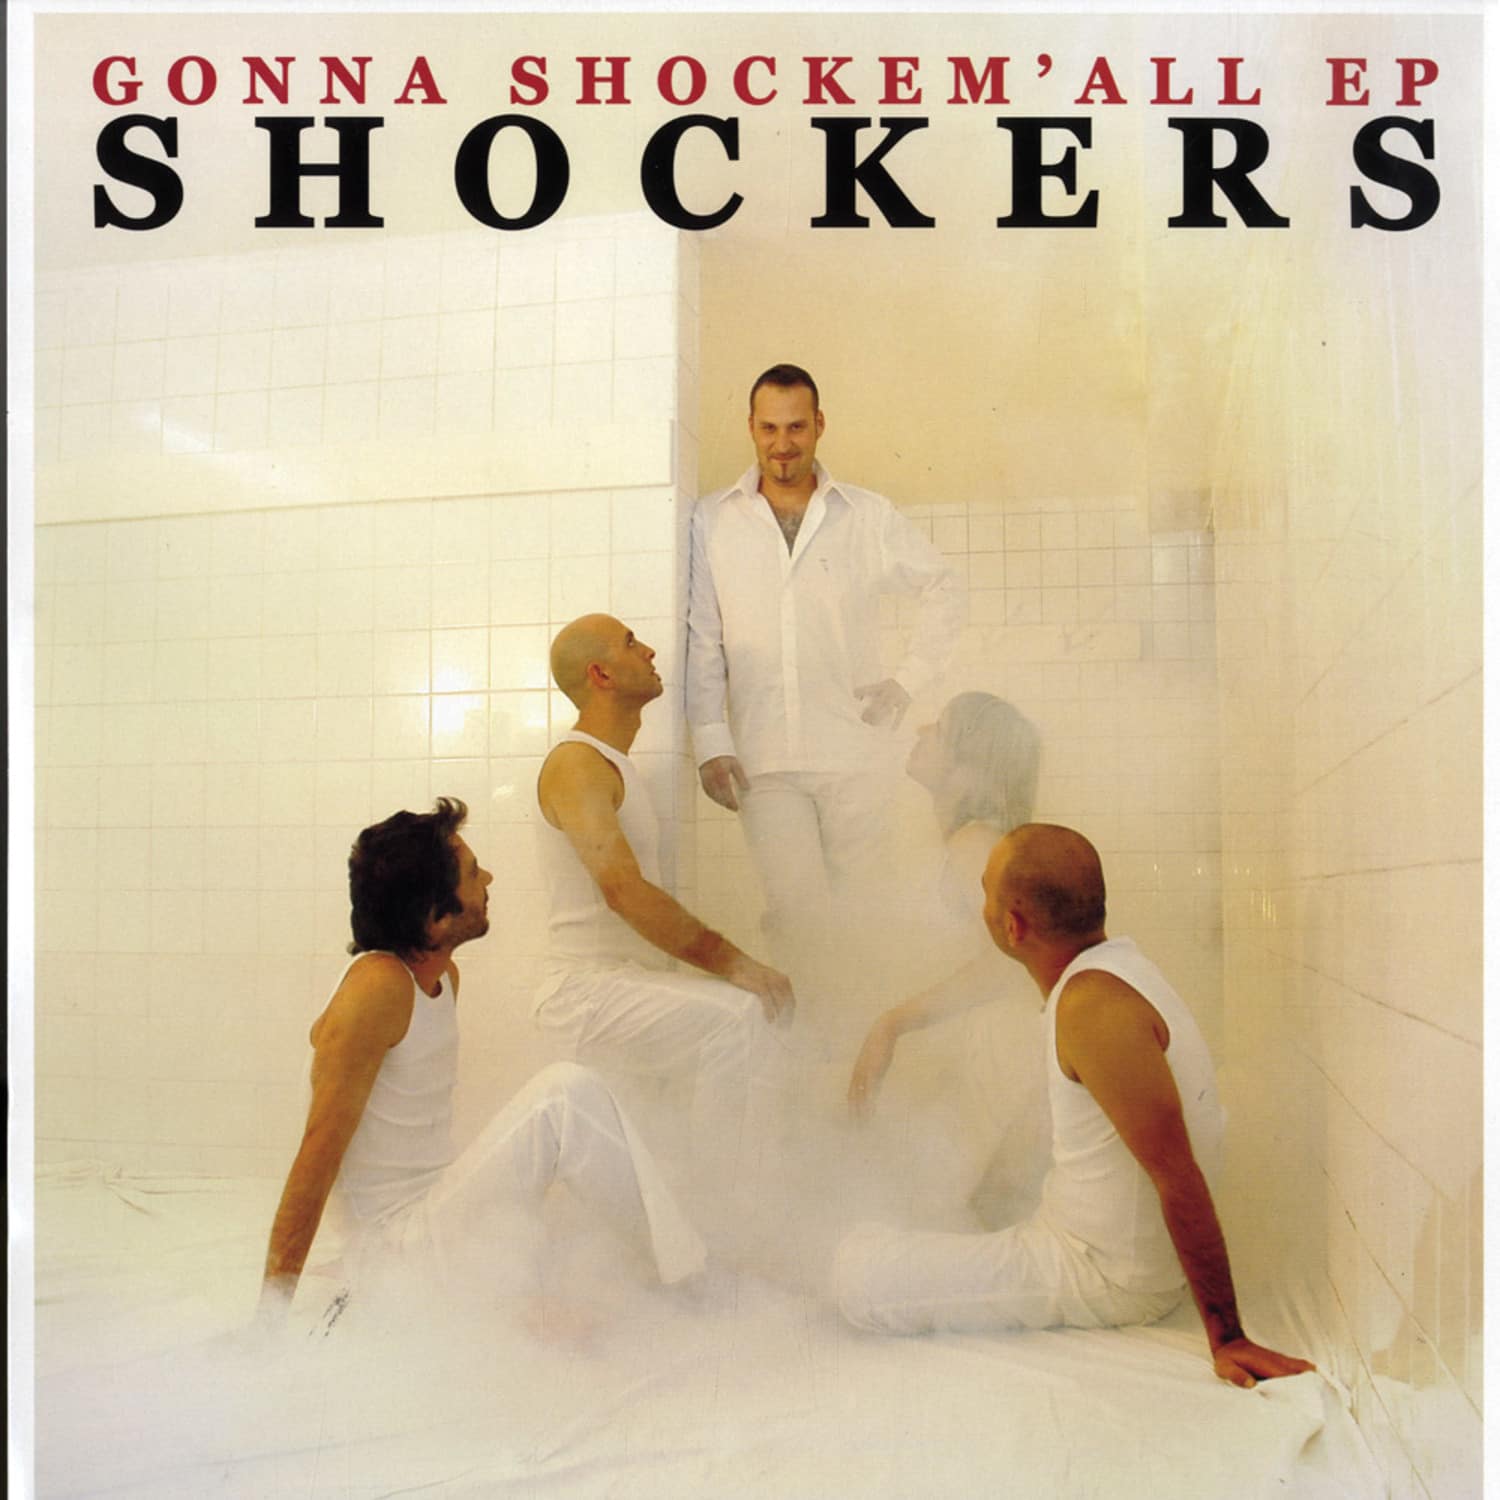 Shockers - GONNA SHOCKEM ALL EP